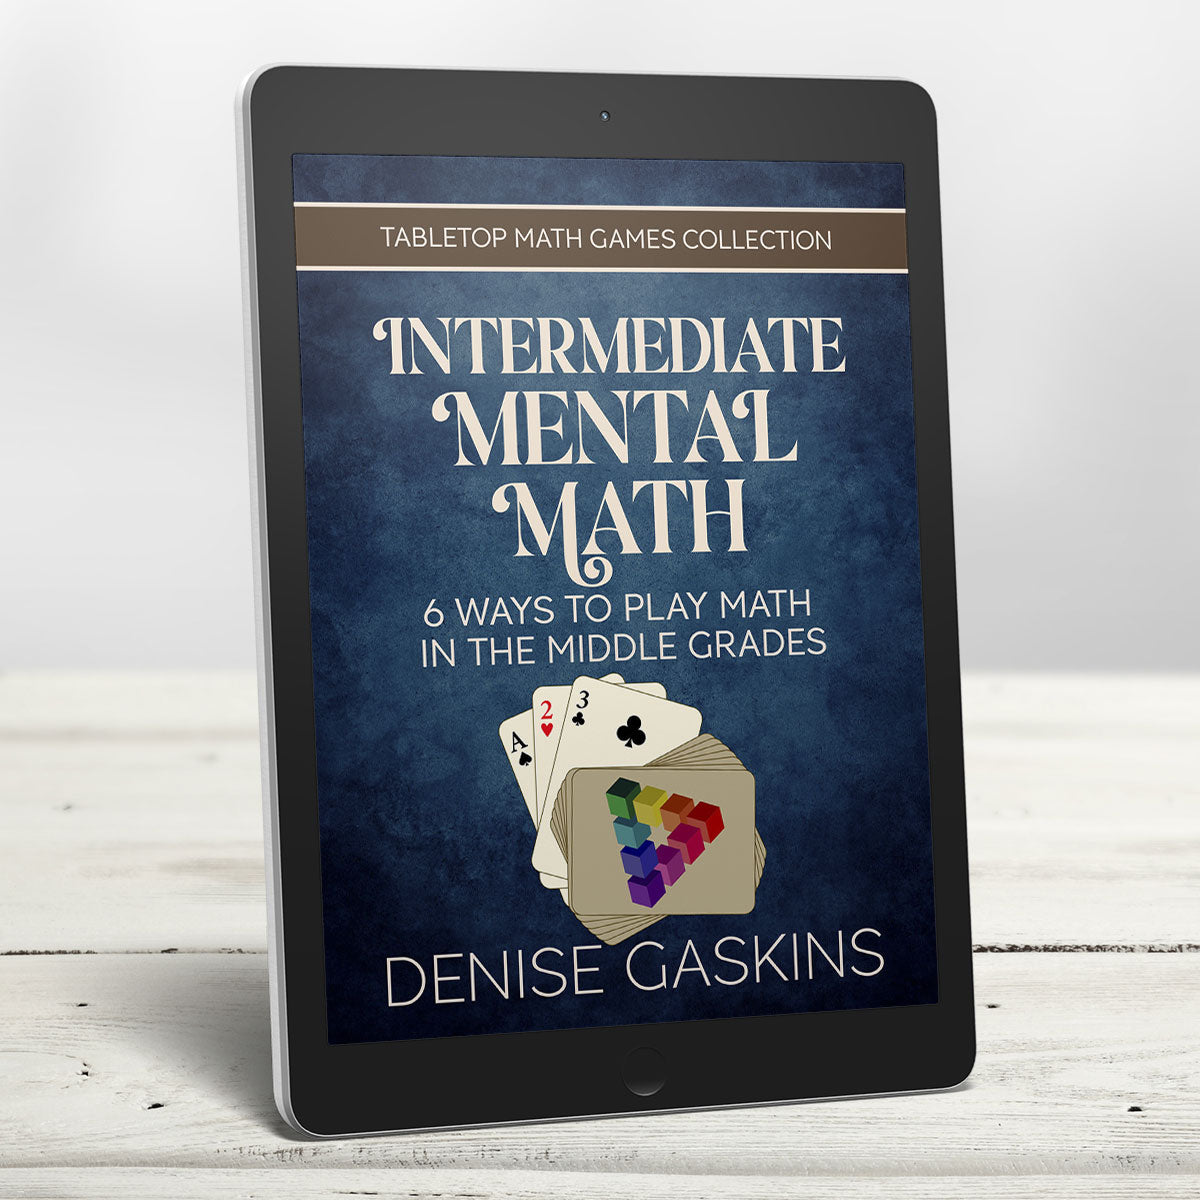 Intermediate Mental math games printable activity book by Denise Gaskins